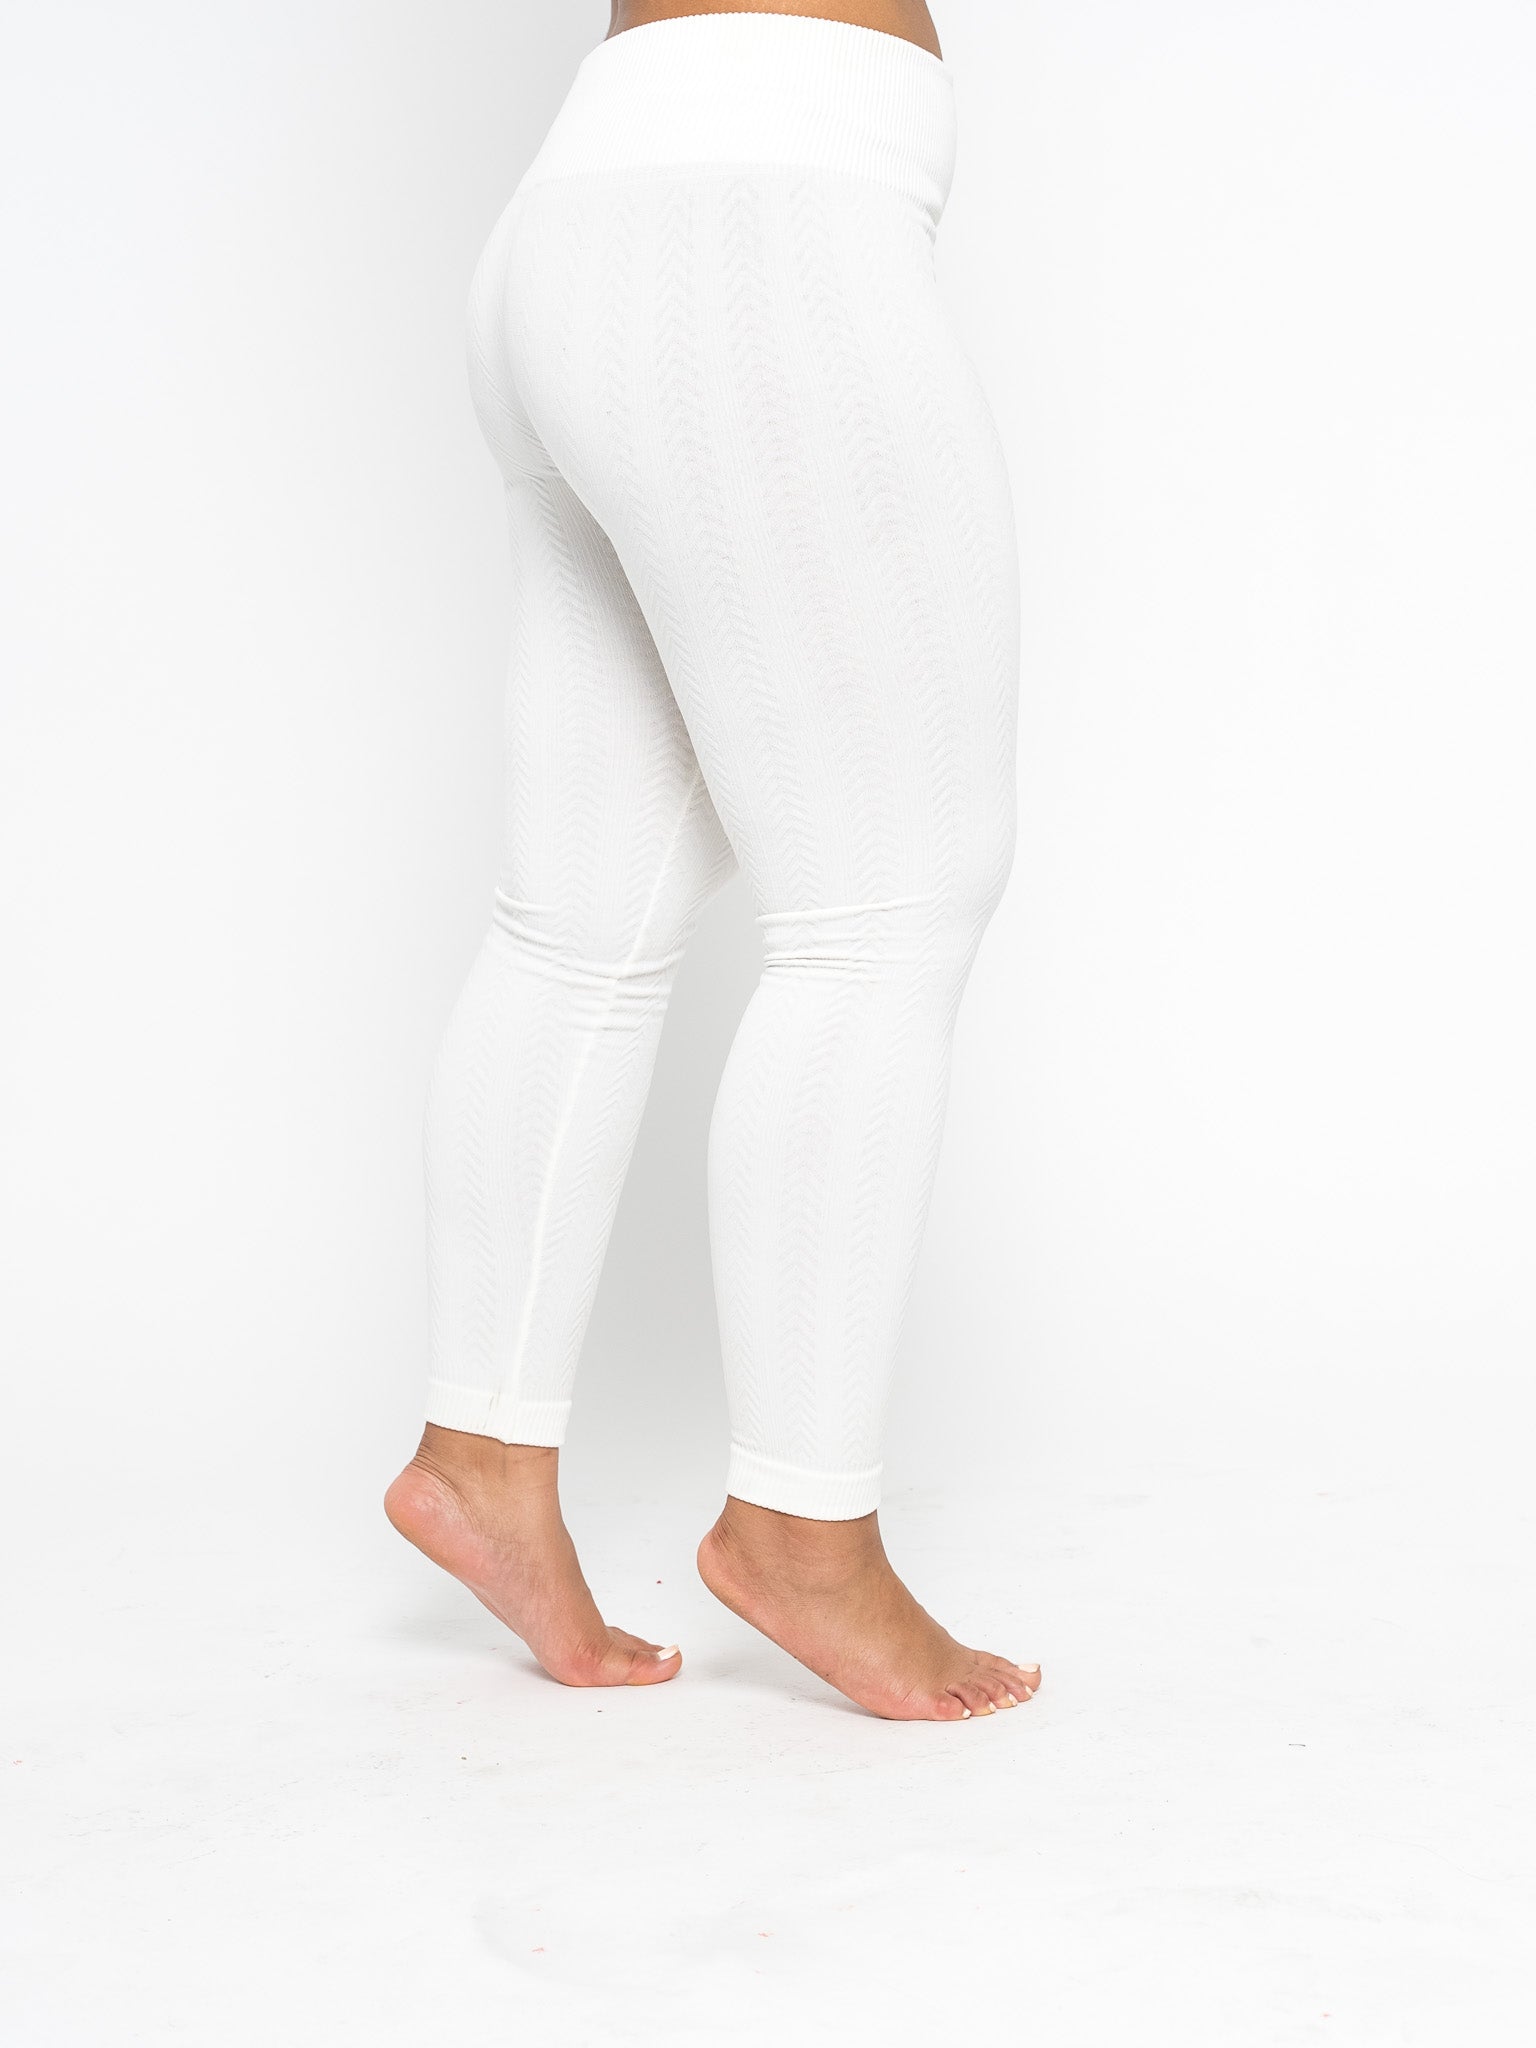 Buy DINNAPE Fleece Lined Leggings Women Thick High Waisted Winter Warm  Leggings, Black, Medium at Amazon.in